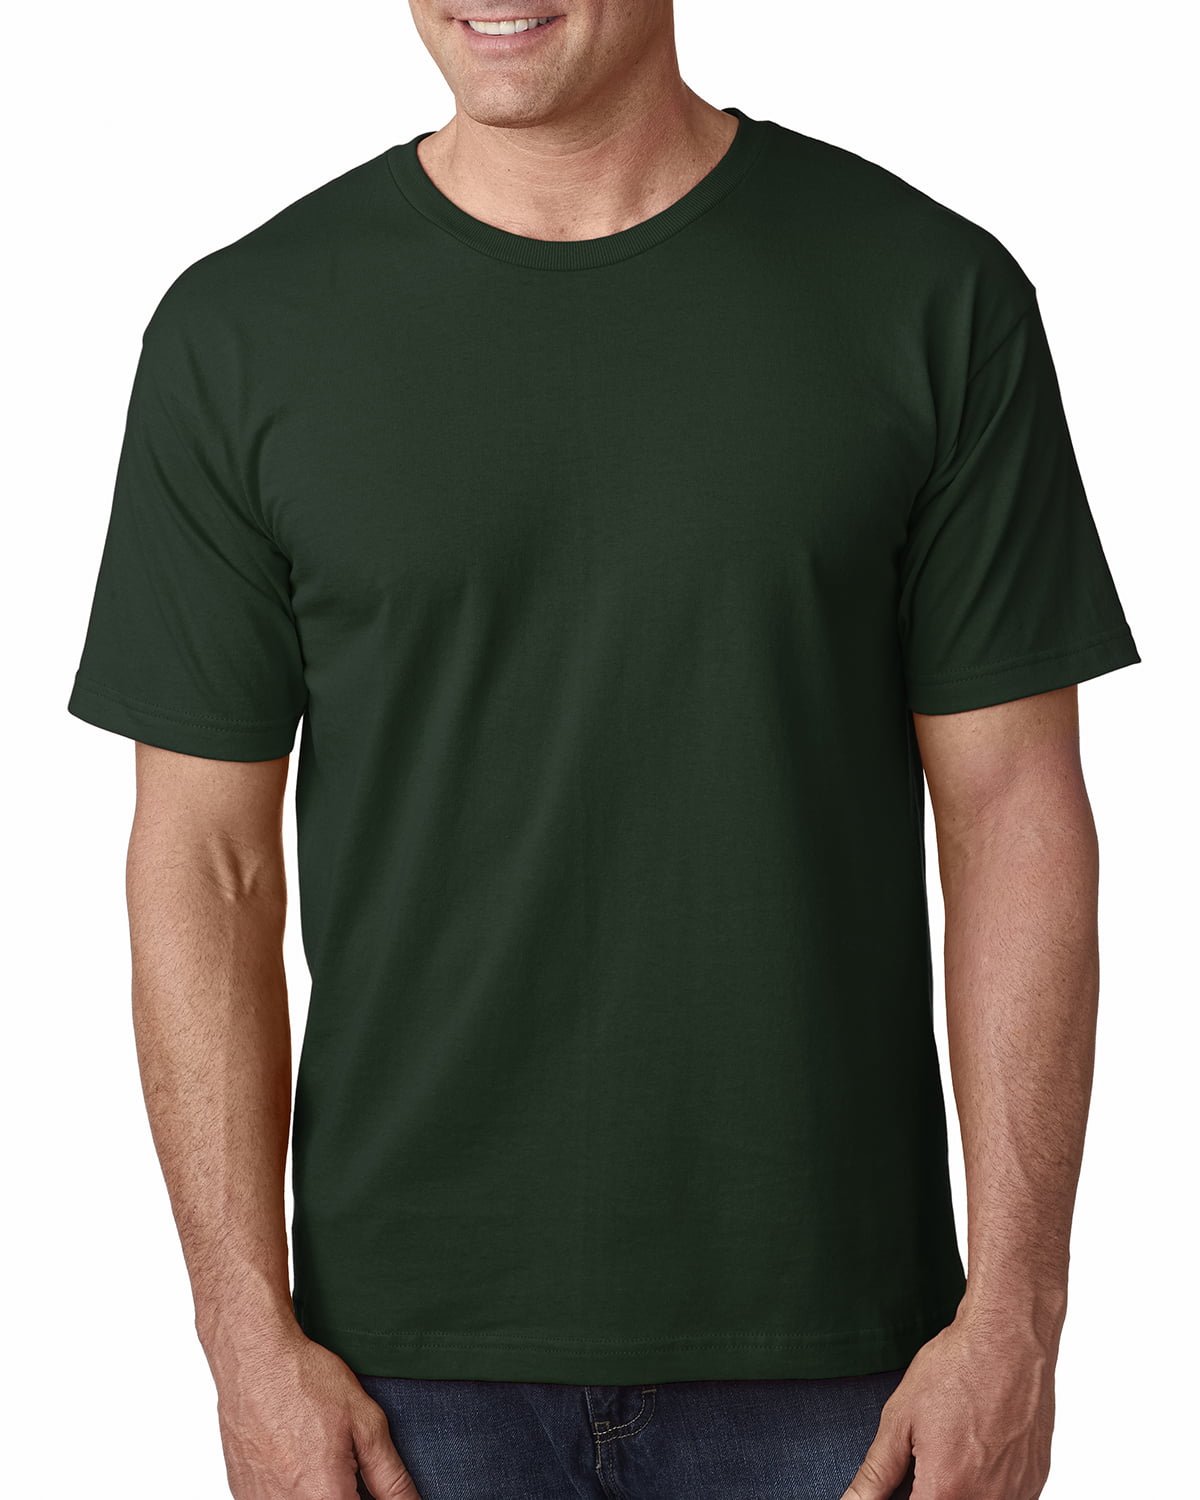 Brand Bayside - The Bayside Adult Short-Sleeve T-Shirt - HUNTER GREEN ...